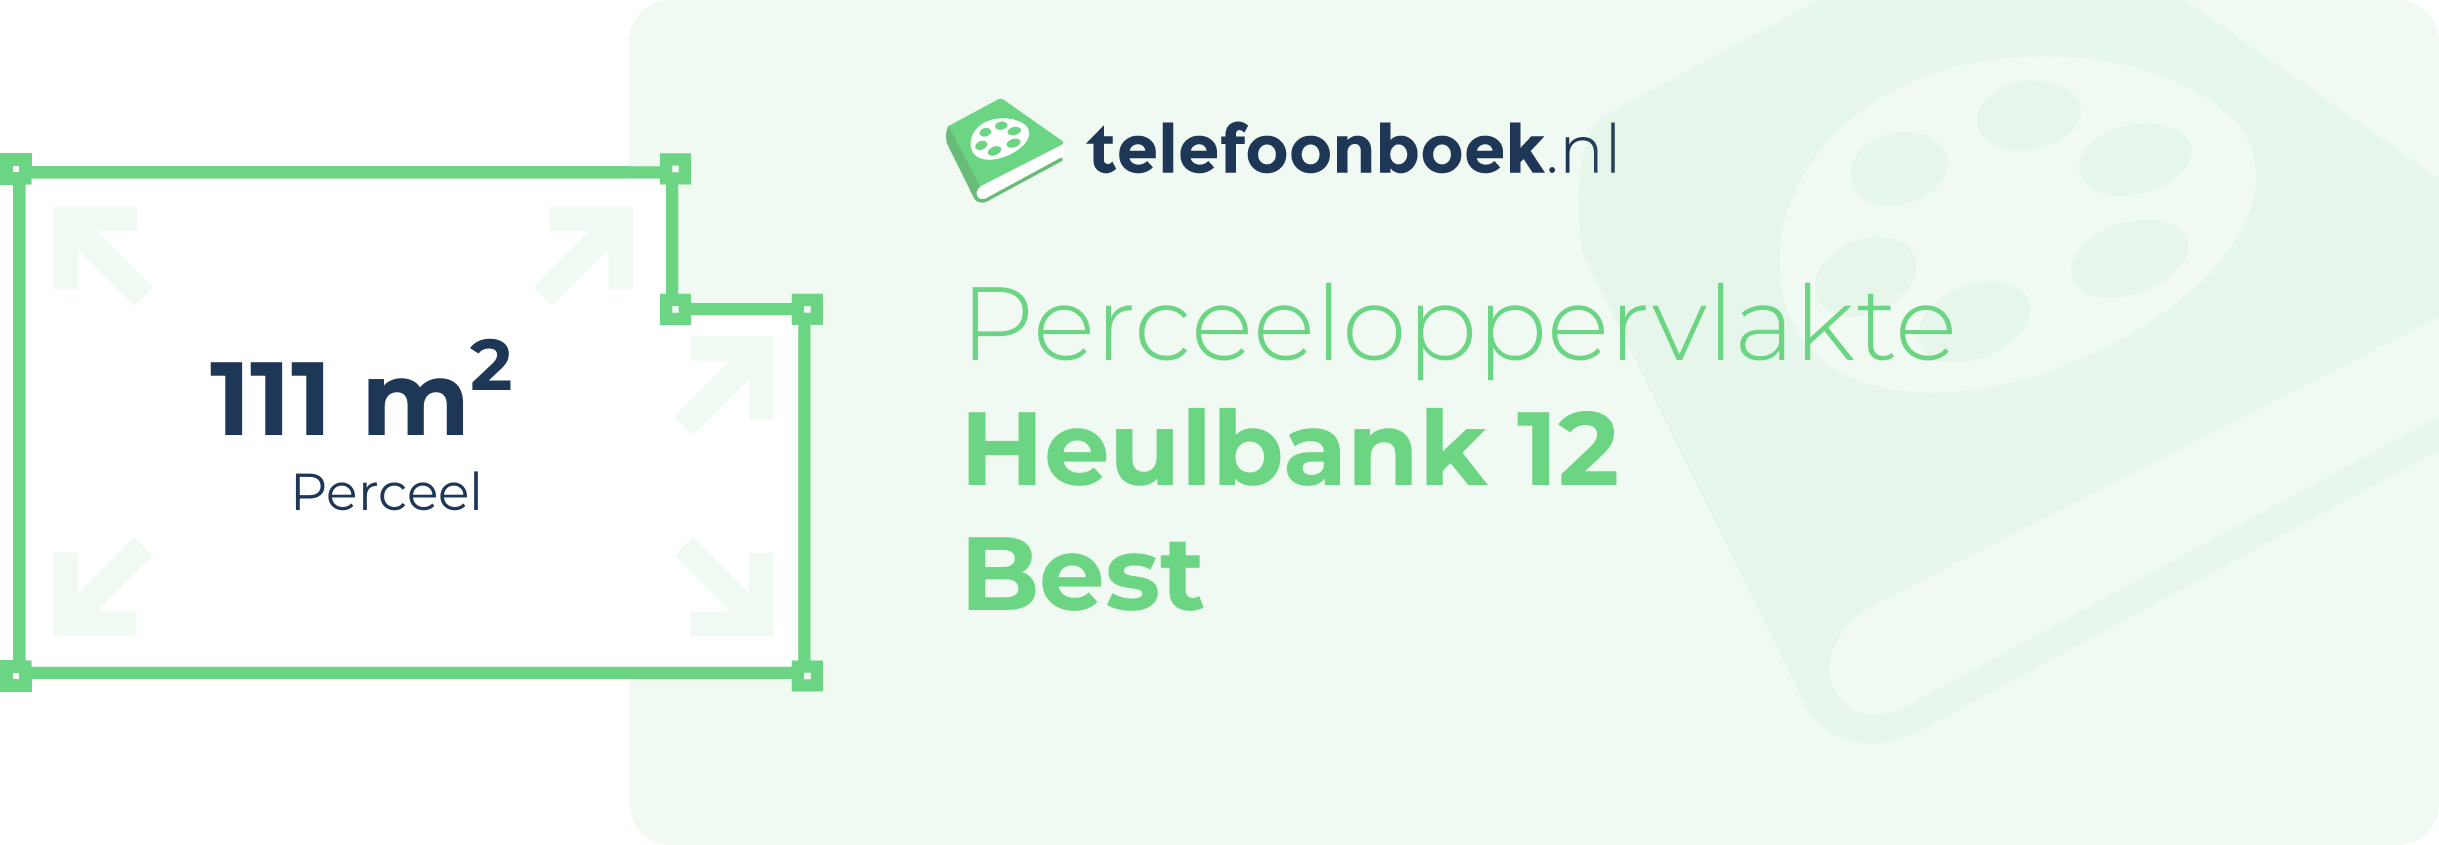 Perceeloppervlakte Heulbank 12 Best